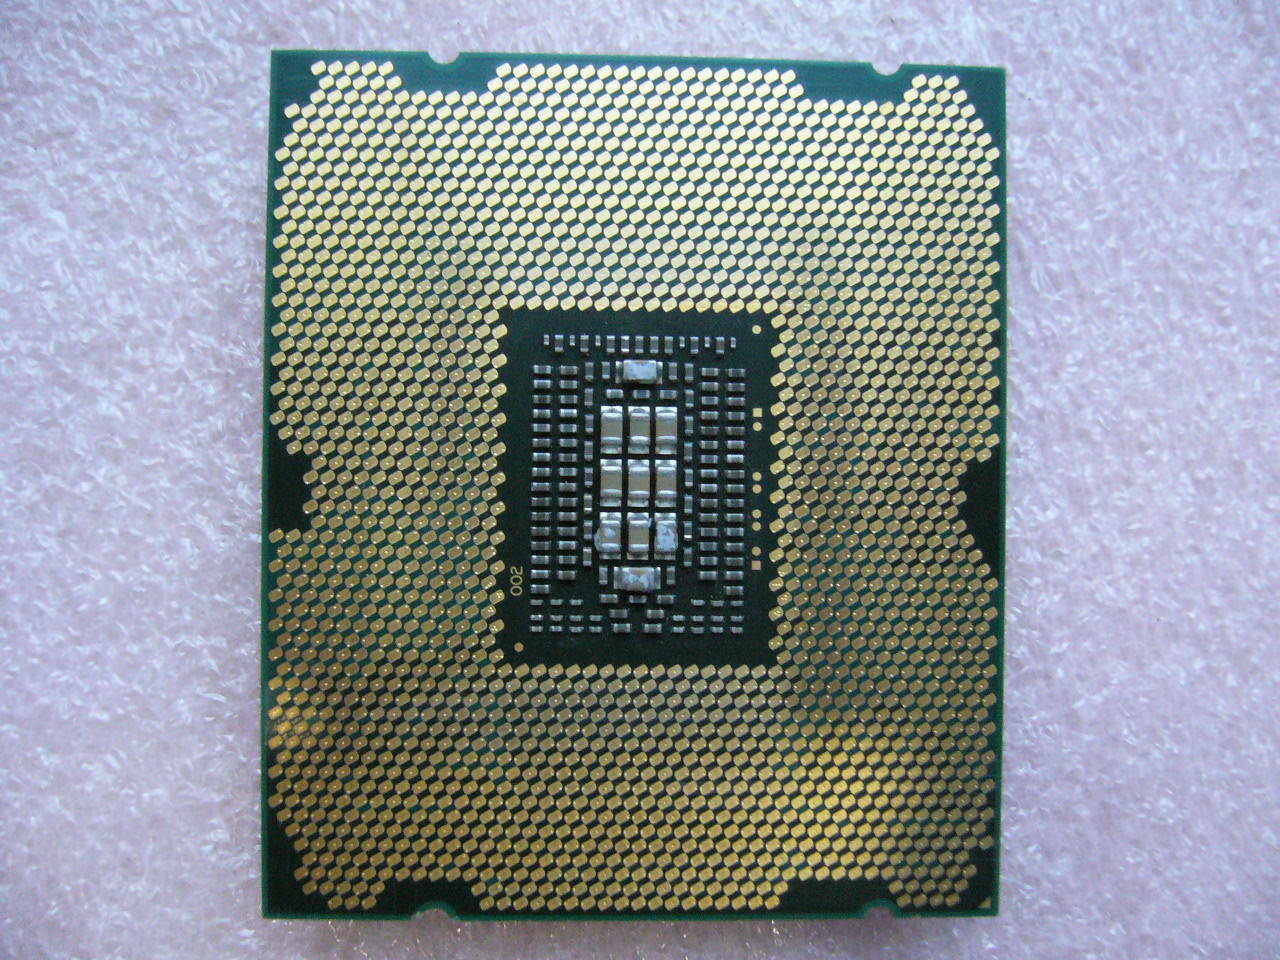 Intel CPU E5-2670 CPU Eight-Cores 2.6Ghz LGA2011 SR0KX